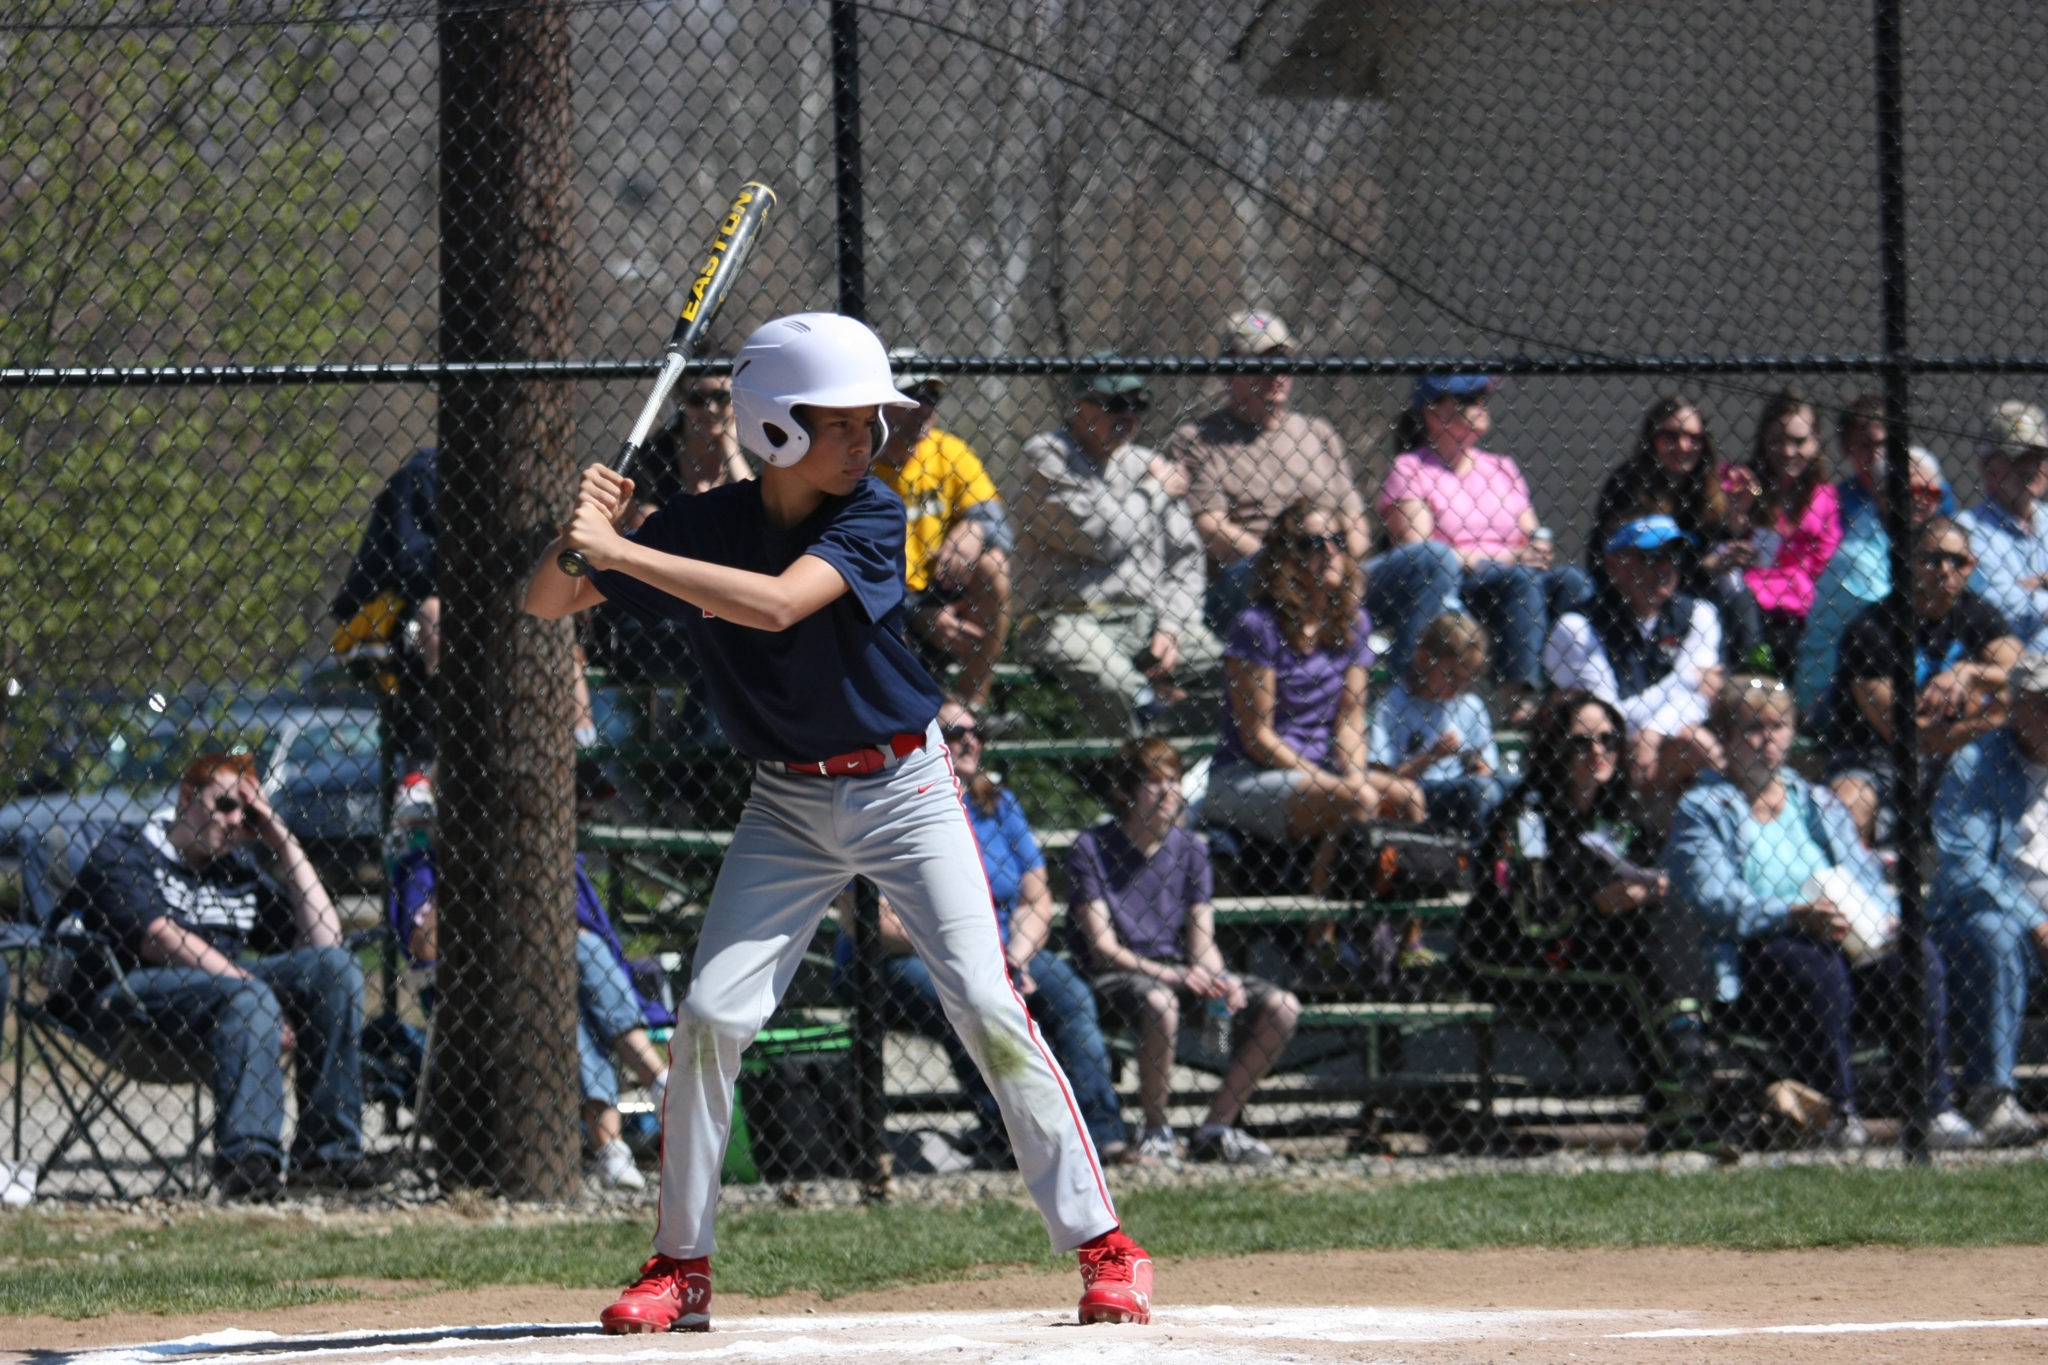 Dodgers win pitcher's duel for AA Title – Zionsville Little League